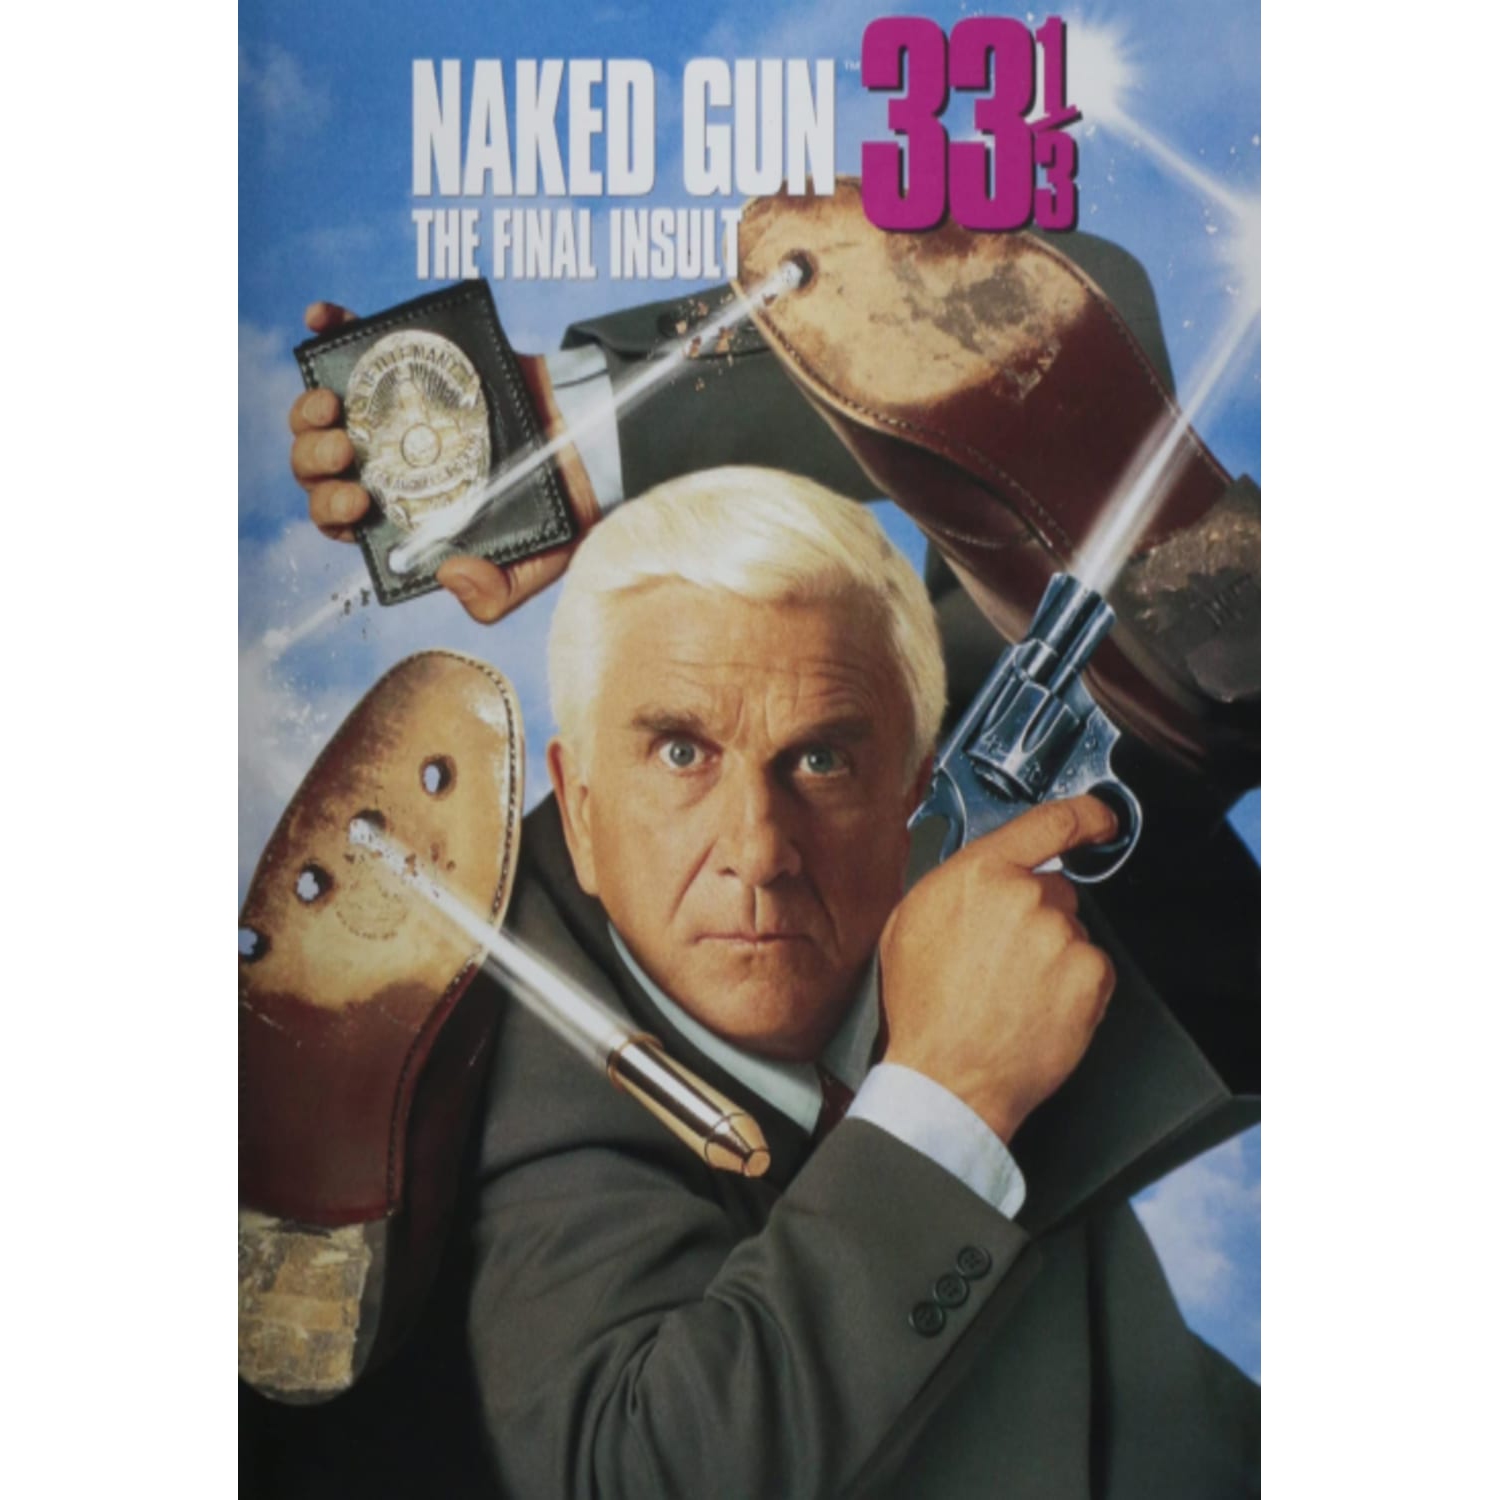 Naked Gun 33 1/3: Final Insult